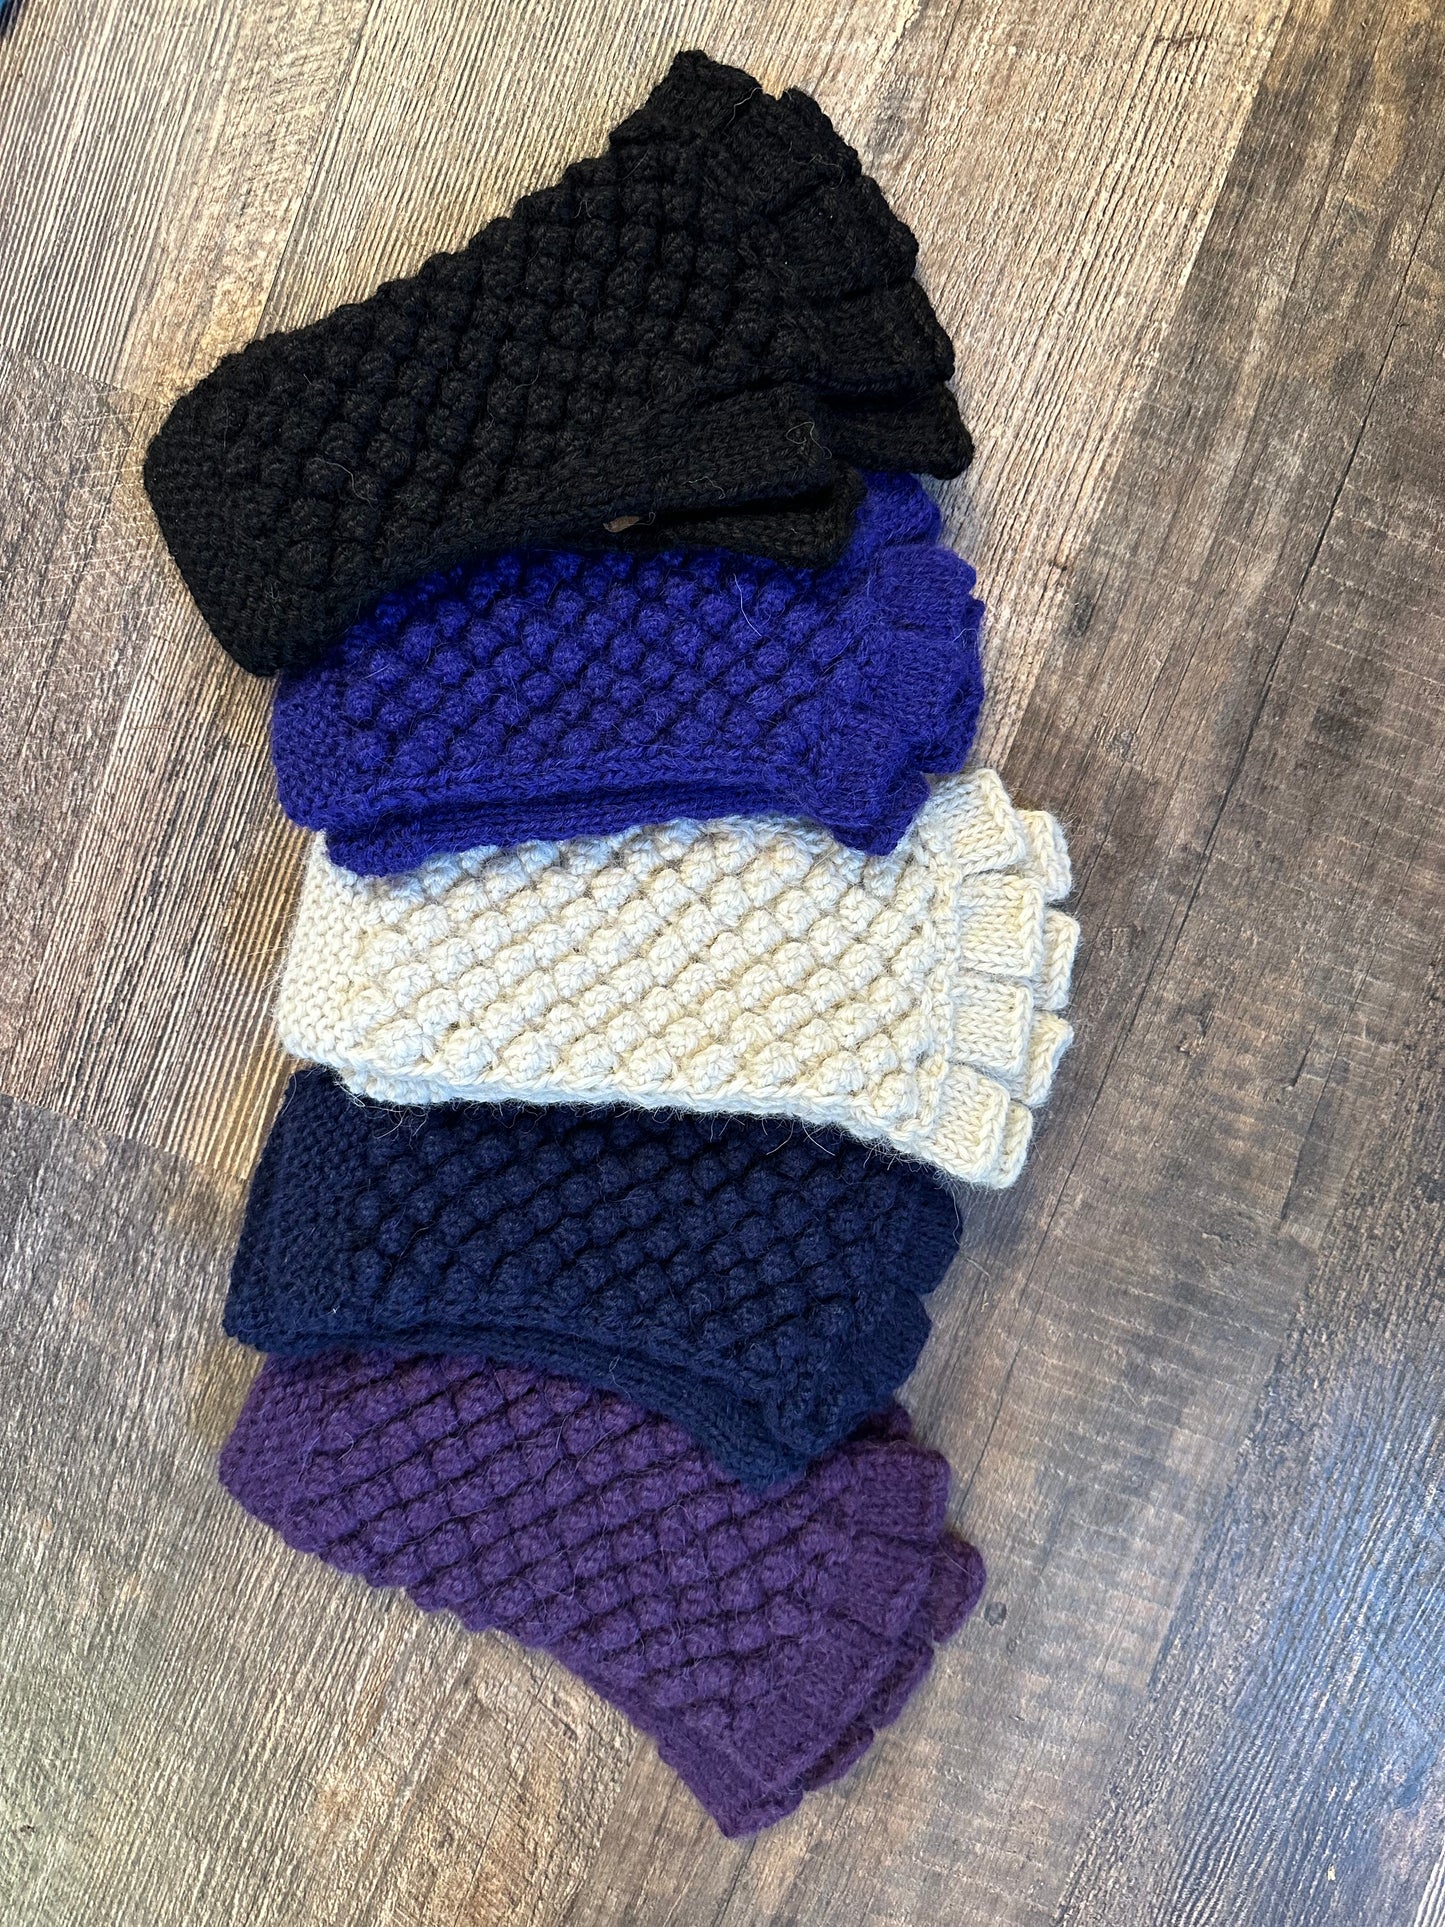 Fingerless Textured Knit Gloves- SO CUTE